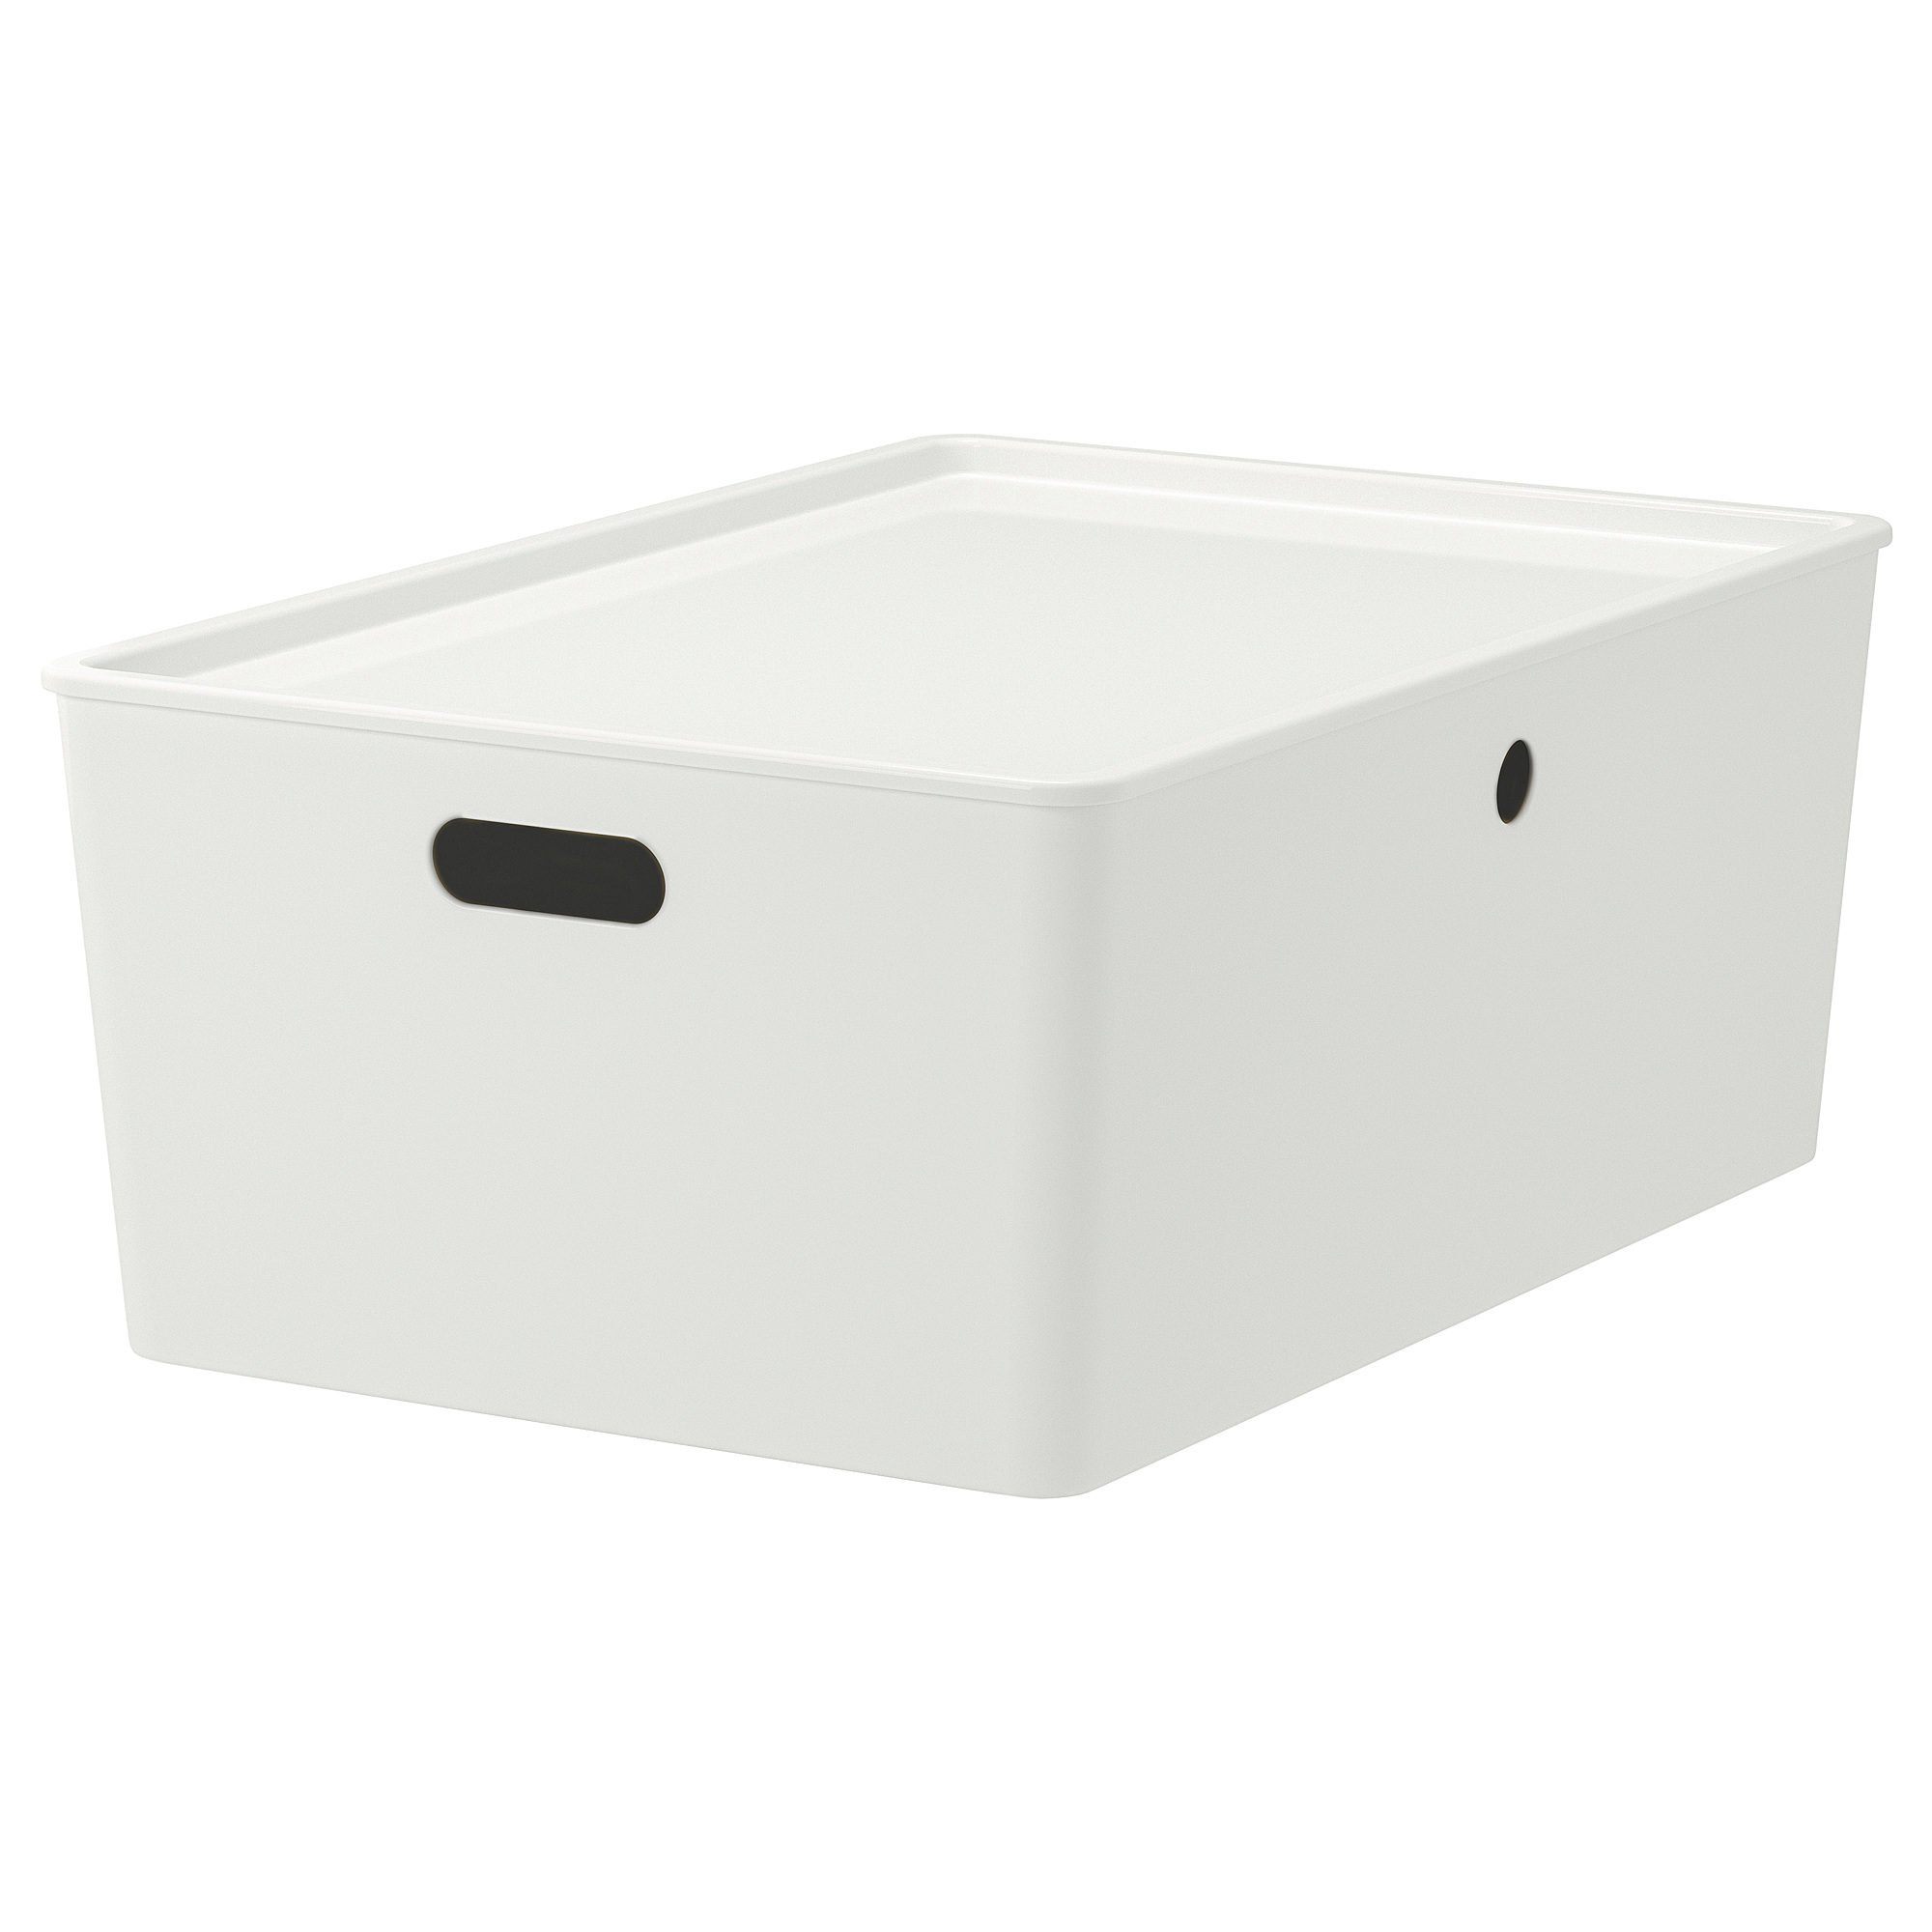 KUGGIS box with lid